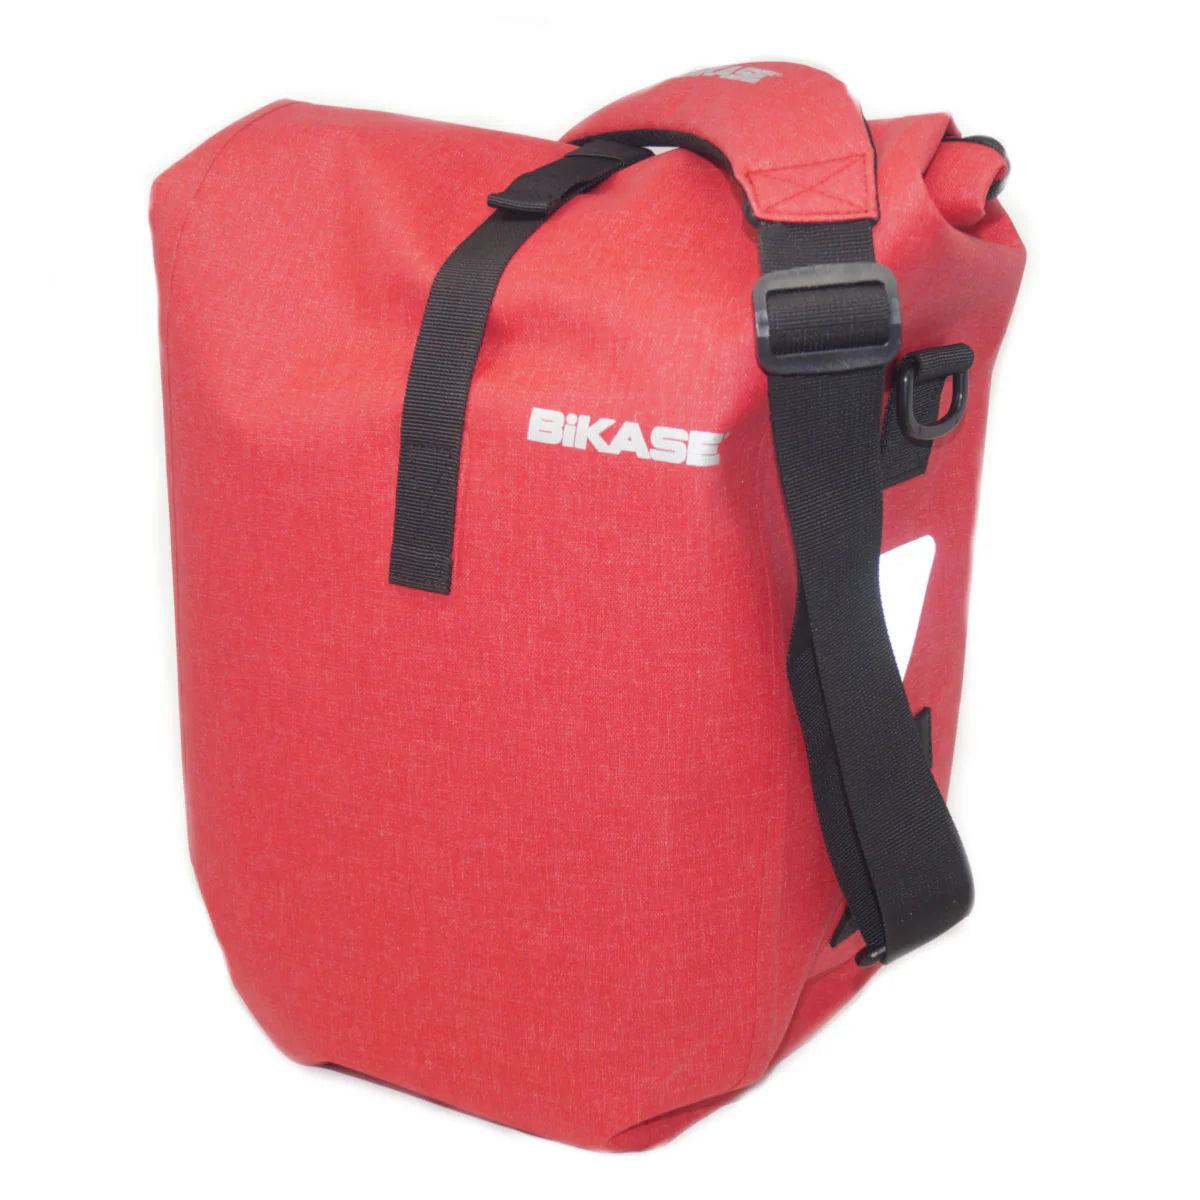 BiKASE 2039R Reggie-2 Dry Bag Pannier Red Single Sided - The Bikesmiths